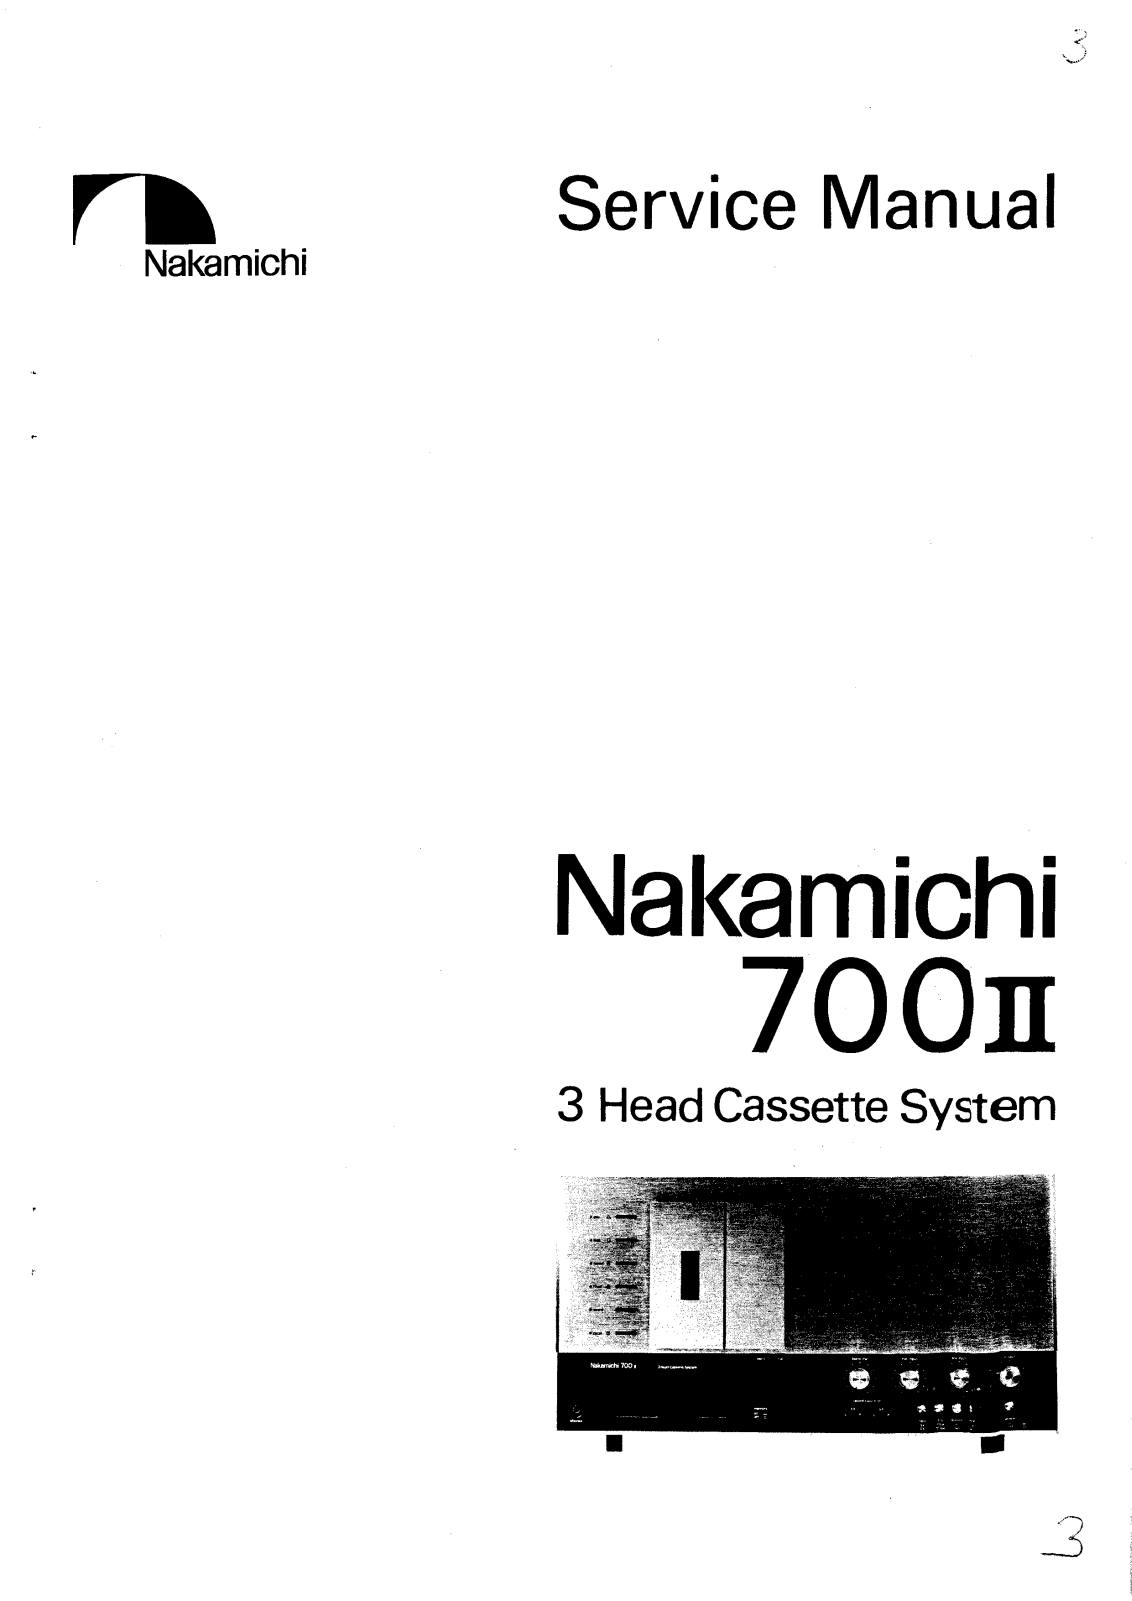 Nakamichi 700-II Service Manual